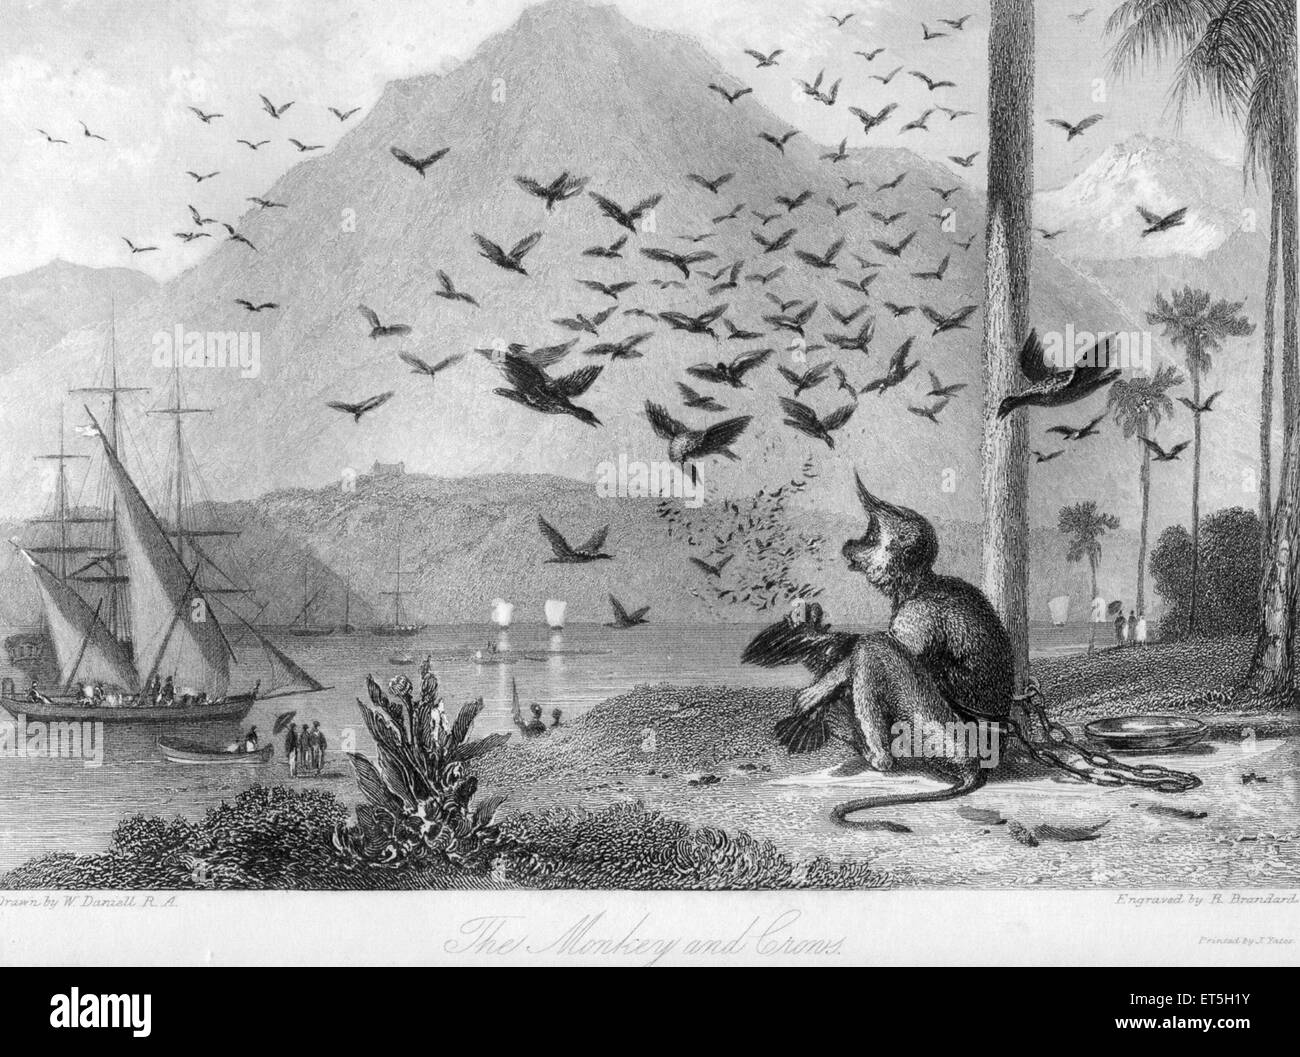 Mono encadenado a árbol, aves voladoras, India, Asia, Asia, India, antiguo grabado de acero vintage 1800s Foto de stock